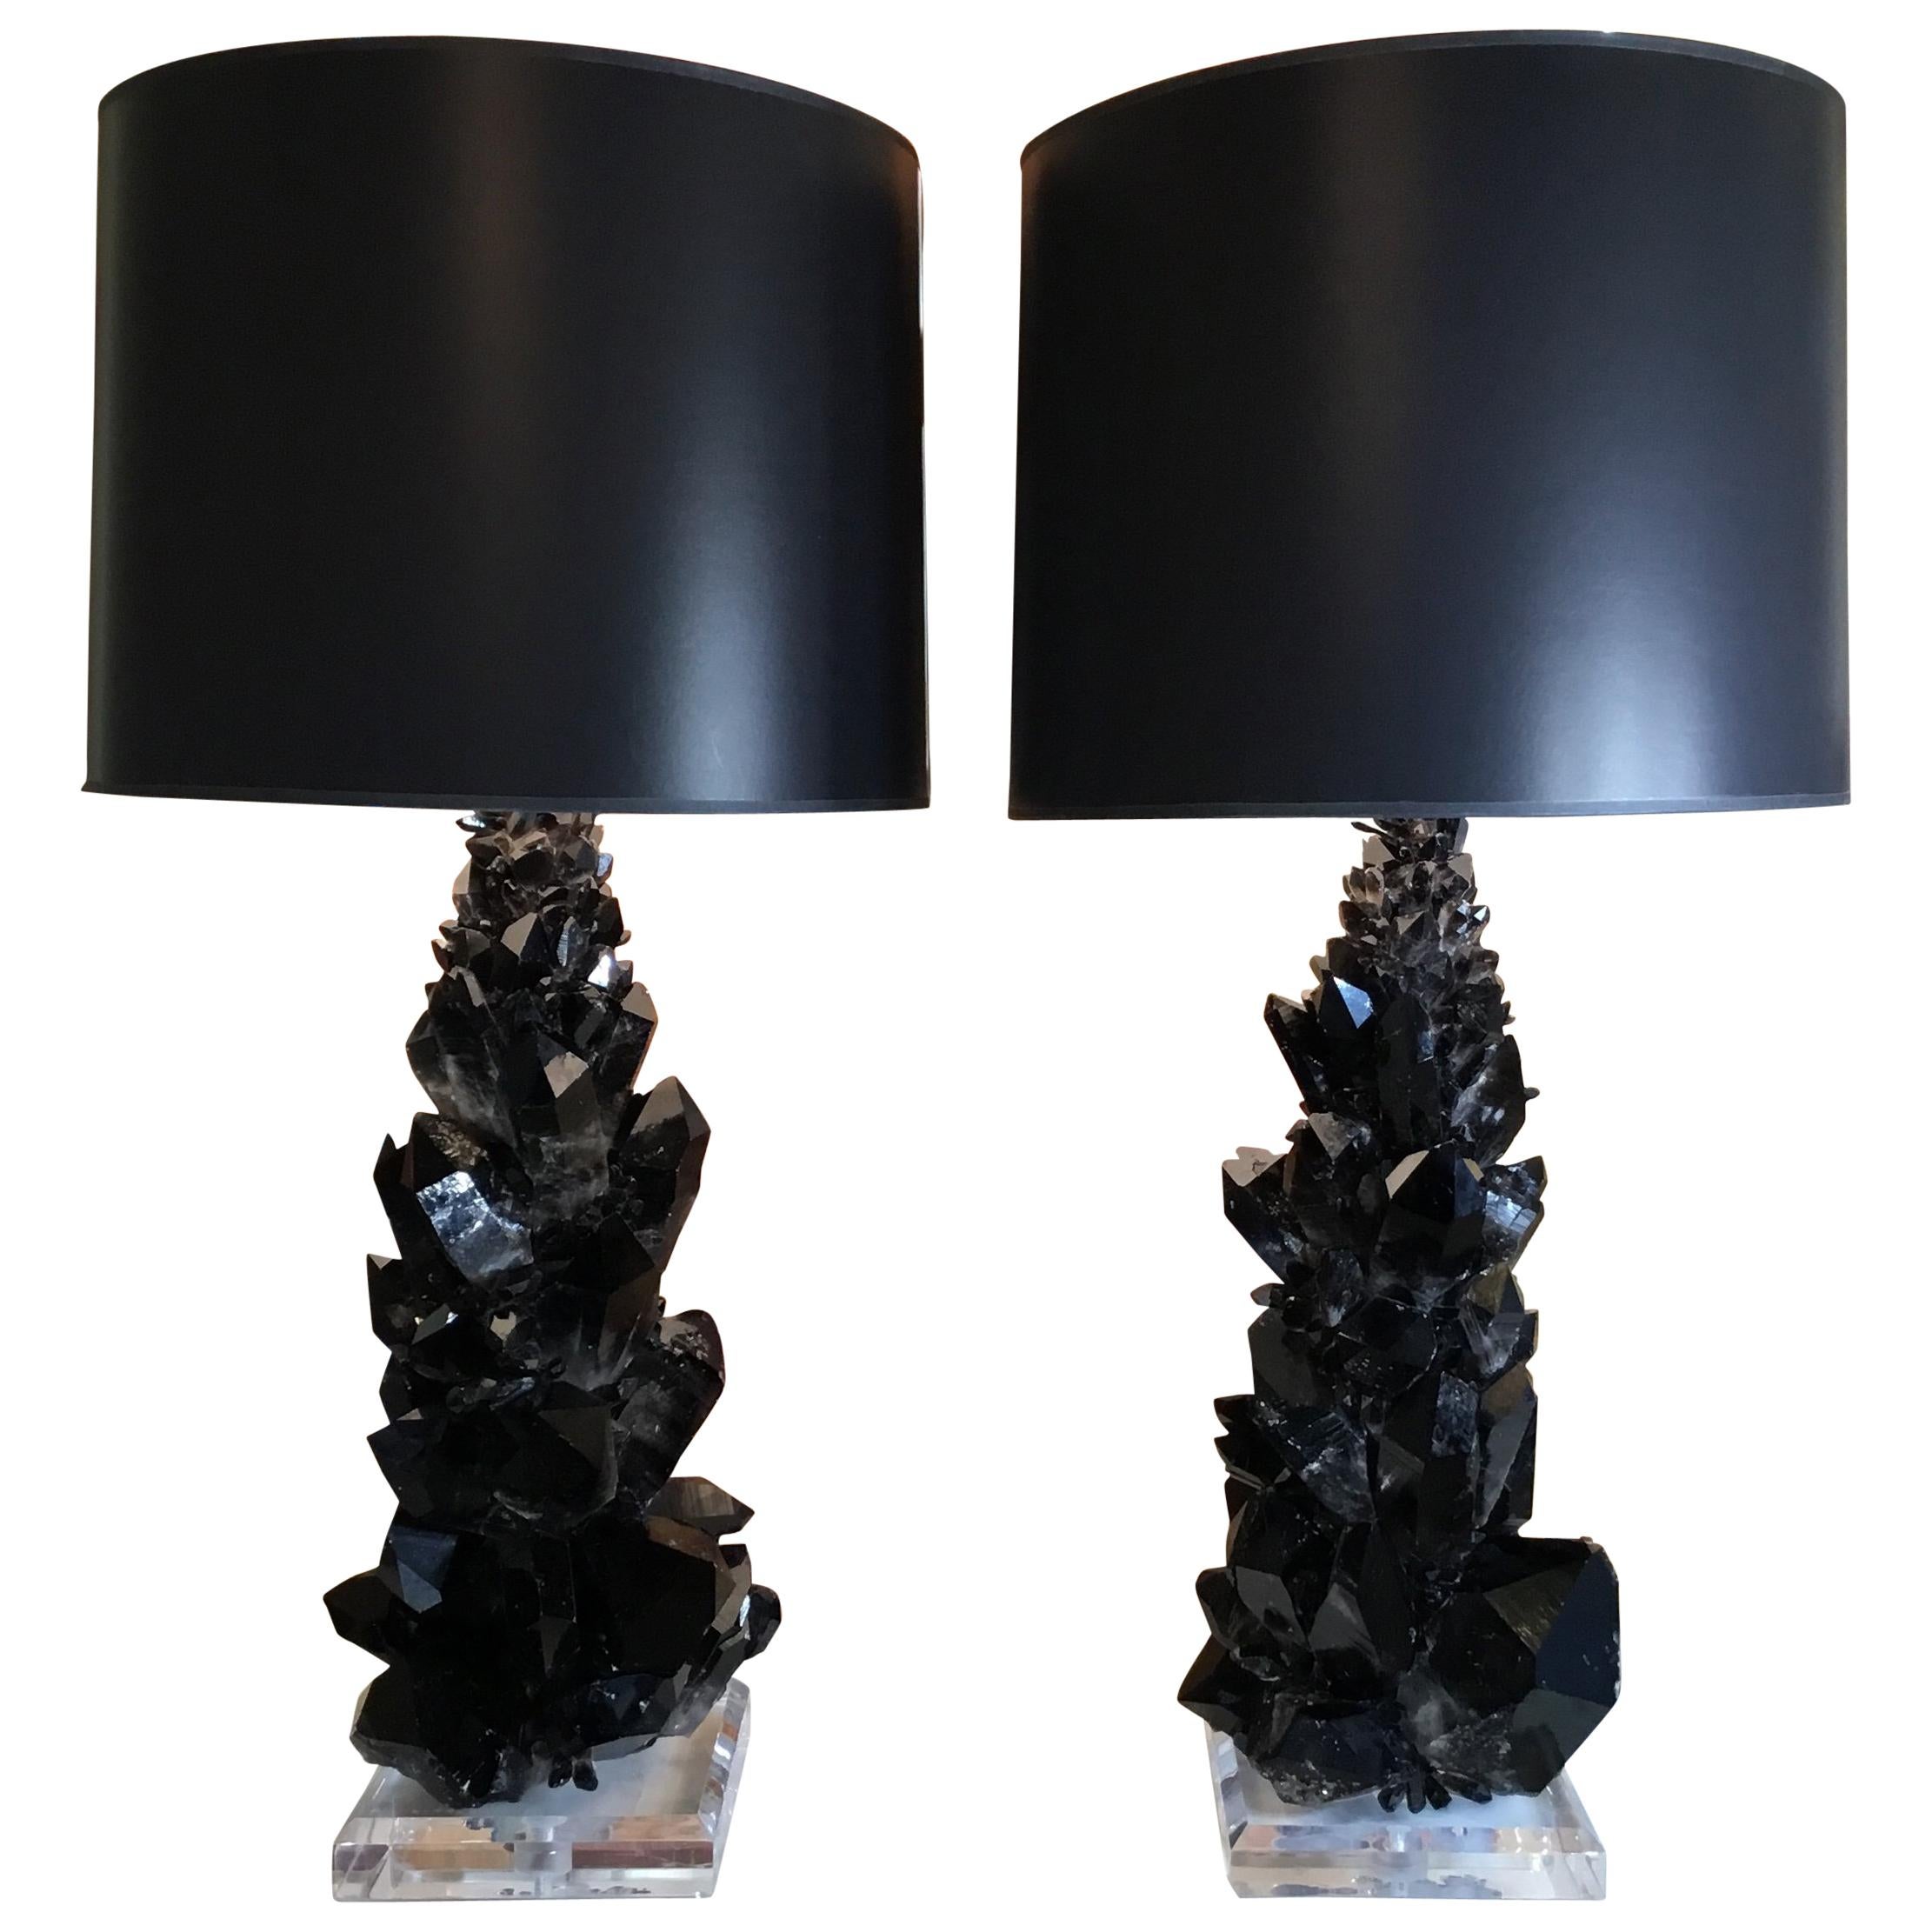 Pair of Spectacular Large Black Quartz Table Lamps